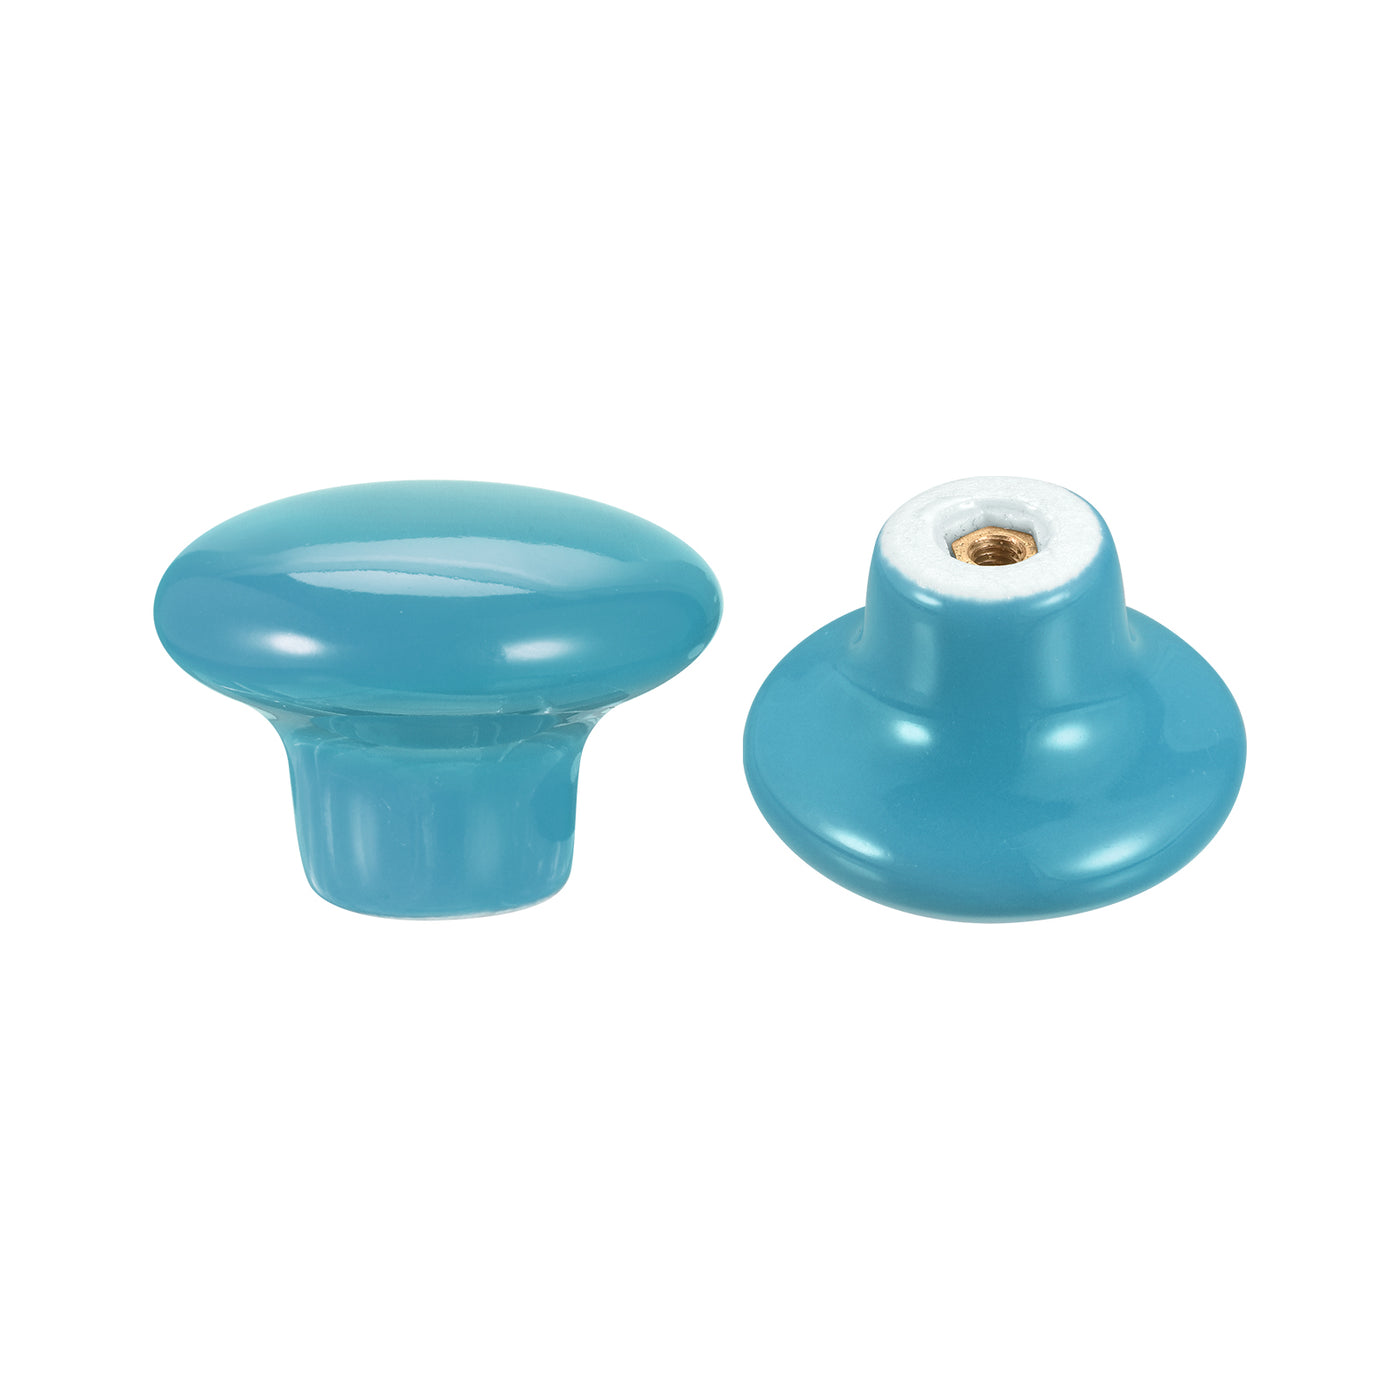 uxcell Uxcell Ceramic Drawer Knobs 6pcs Mushroom Shape Pulls 1.1"x1.5" for Dresser(Blue)